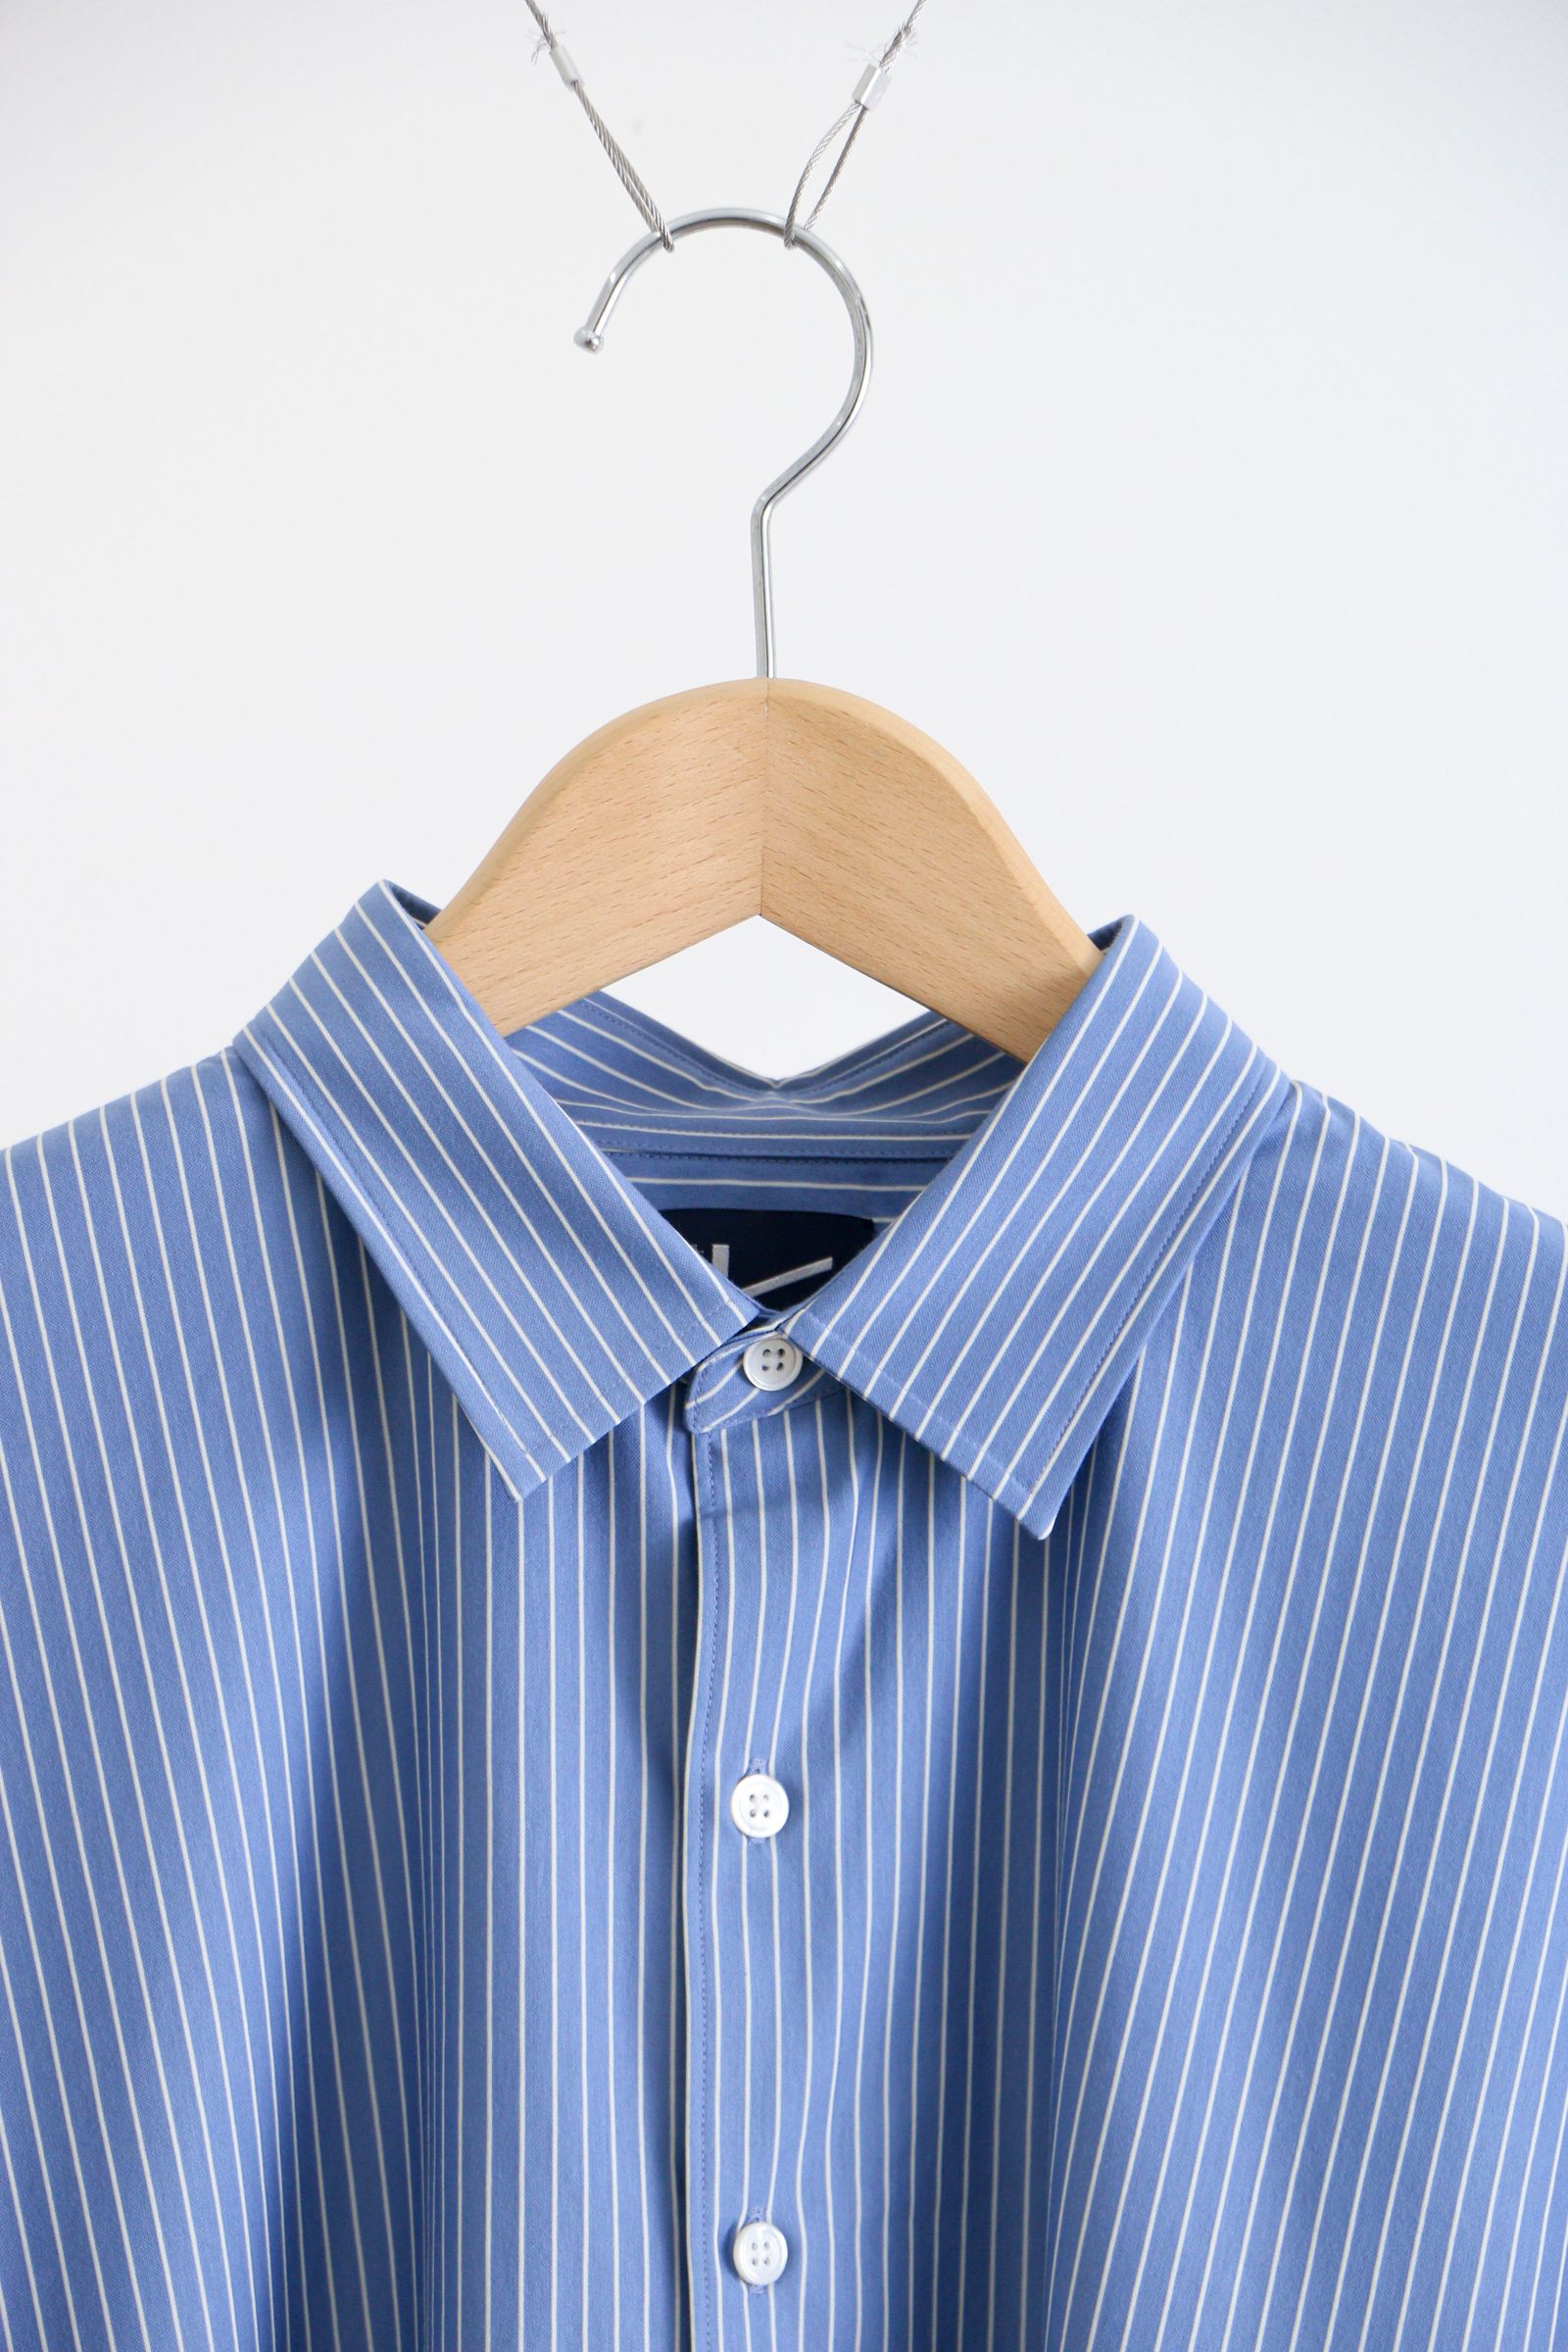 Pencil Stripe Dress Jersey Shirt / BL SP /オーバーサイズ / シャツ / ストライプ - M